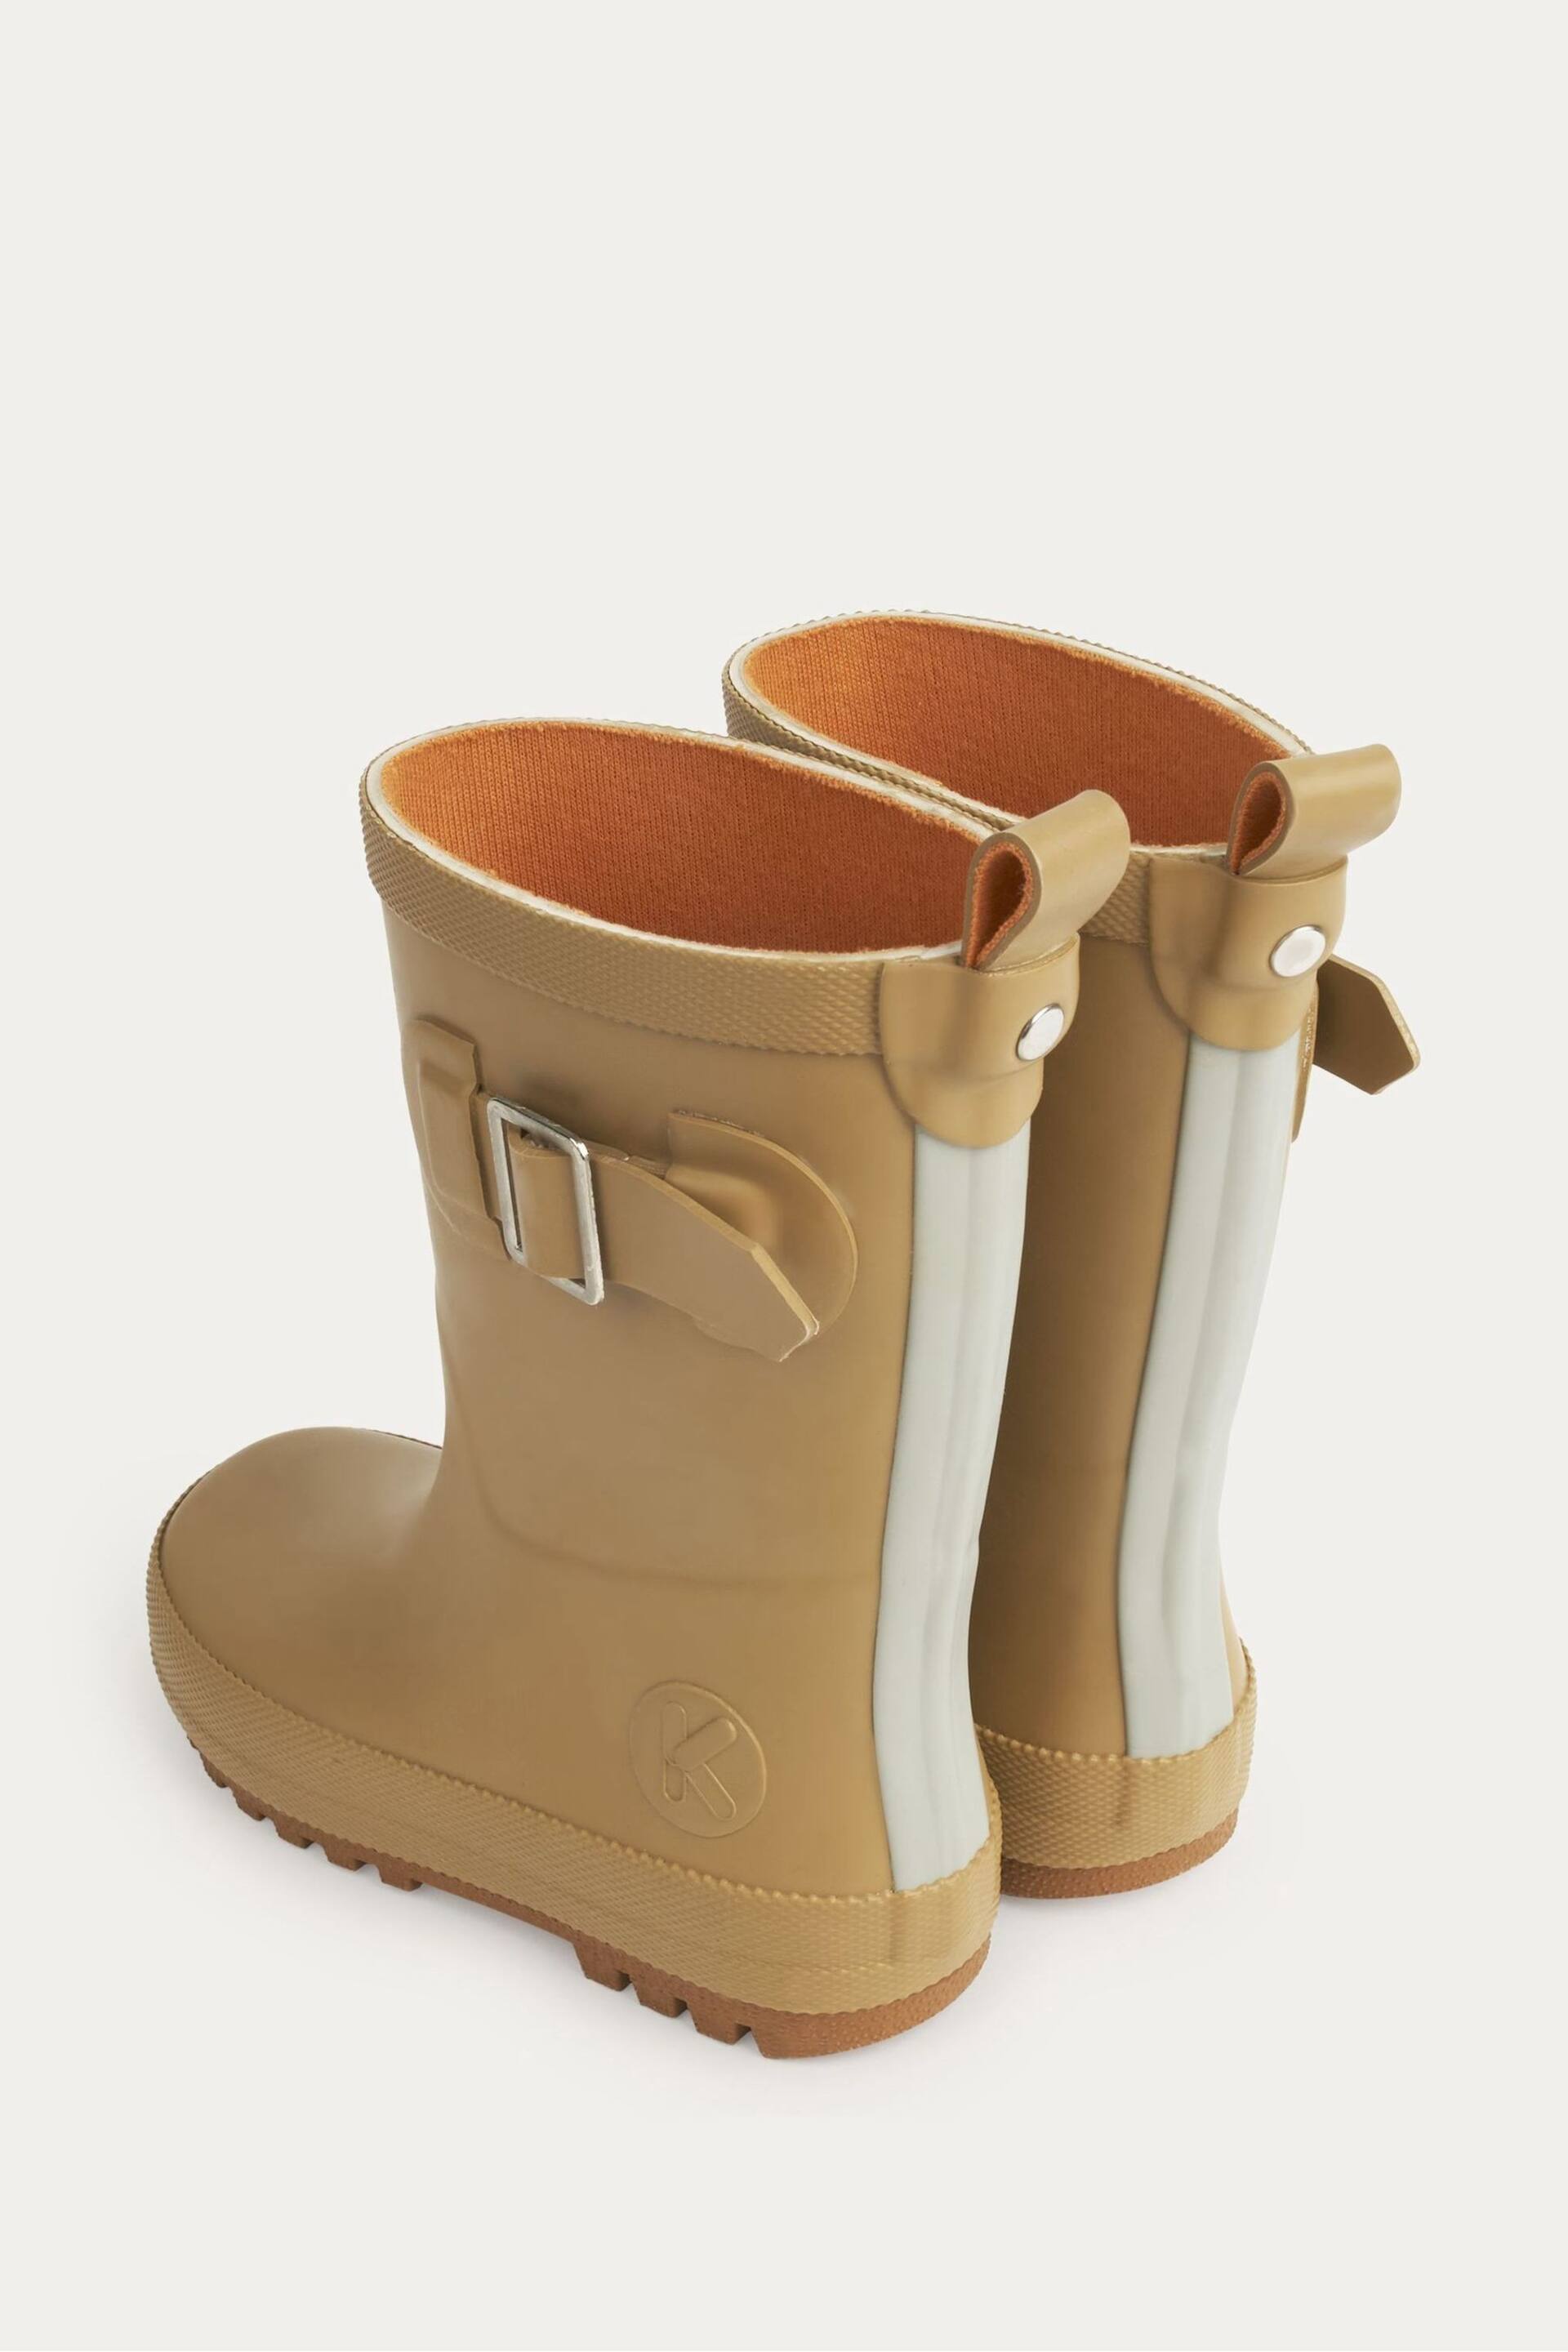 KIDLY Rain Boots with Binding - Image 3 of 7